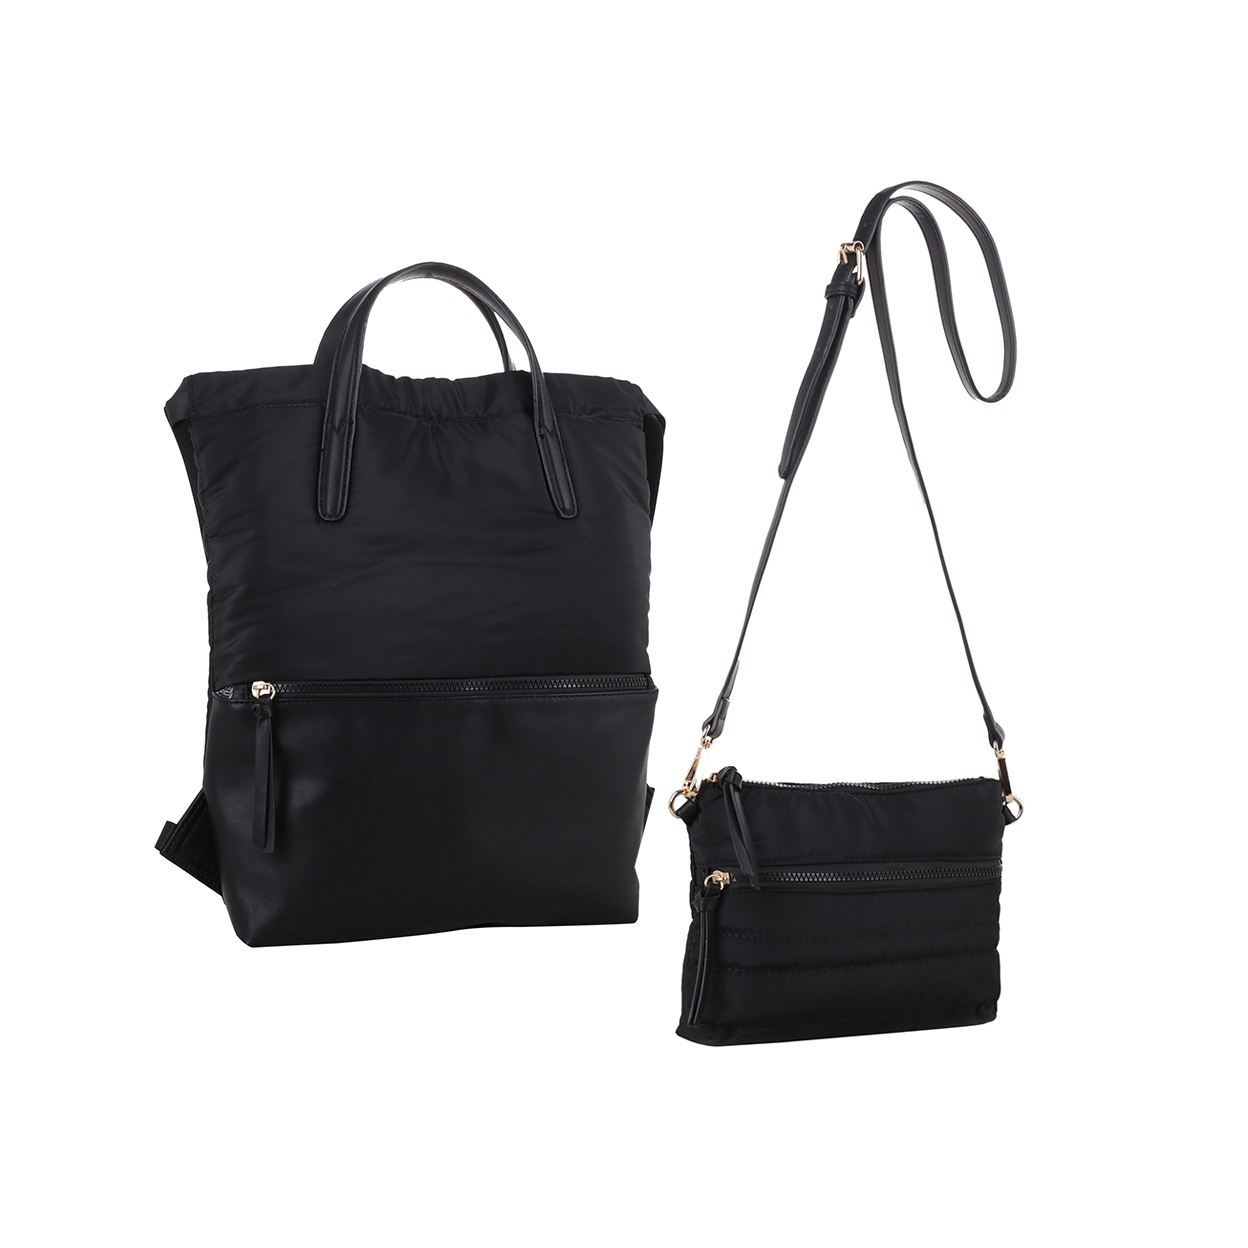 MKF Collection By Mia K. Buy Large Handbag, Get Crossbody Free - Black